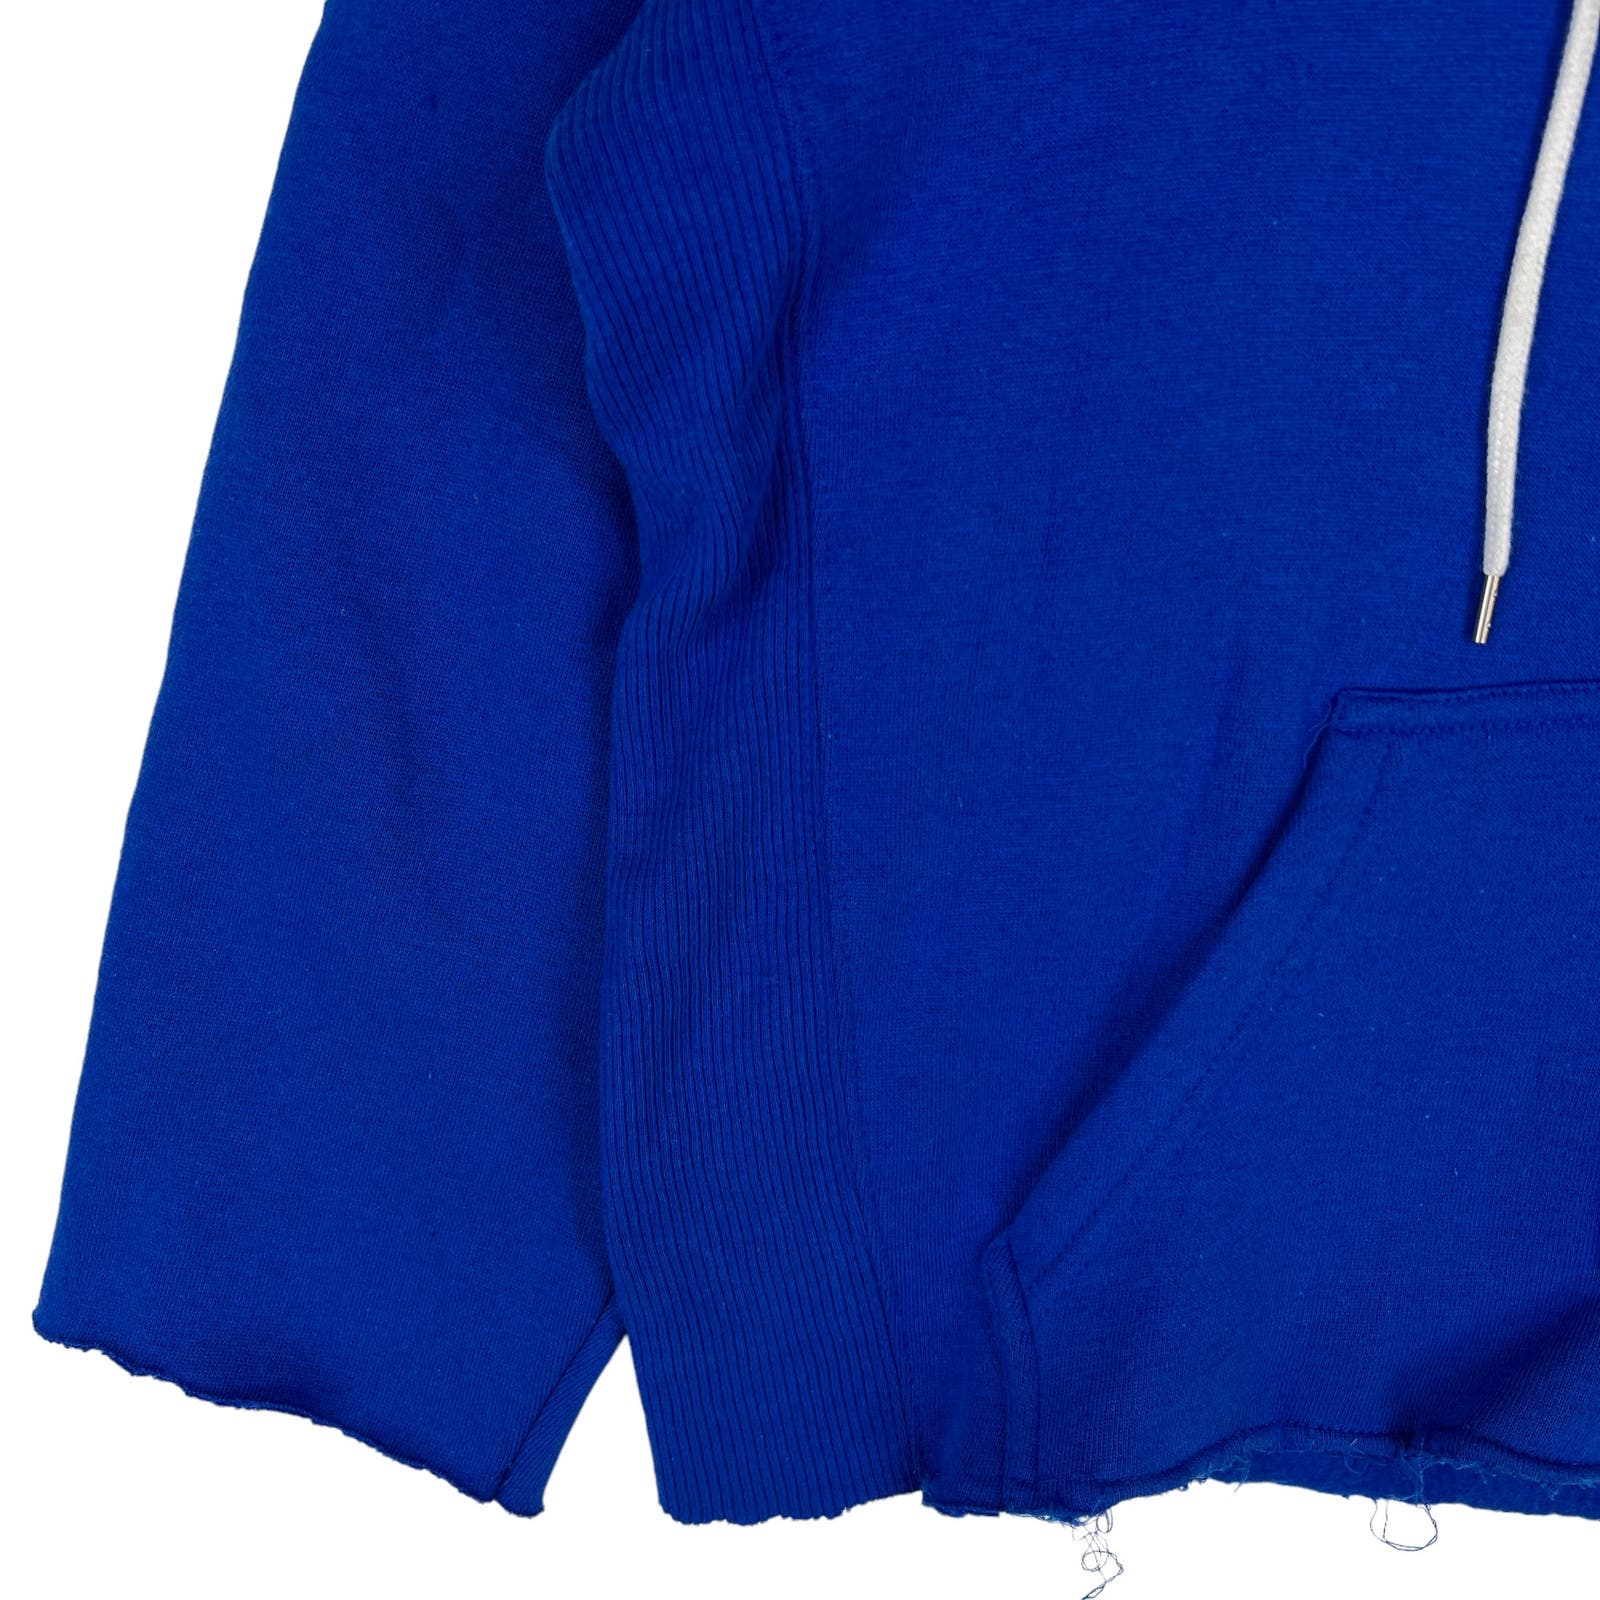 KOZA Men Blue Hoodie Pull-on US M Long Sleeve Unisex Cotton Sweater